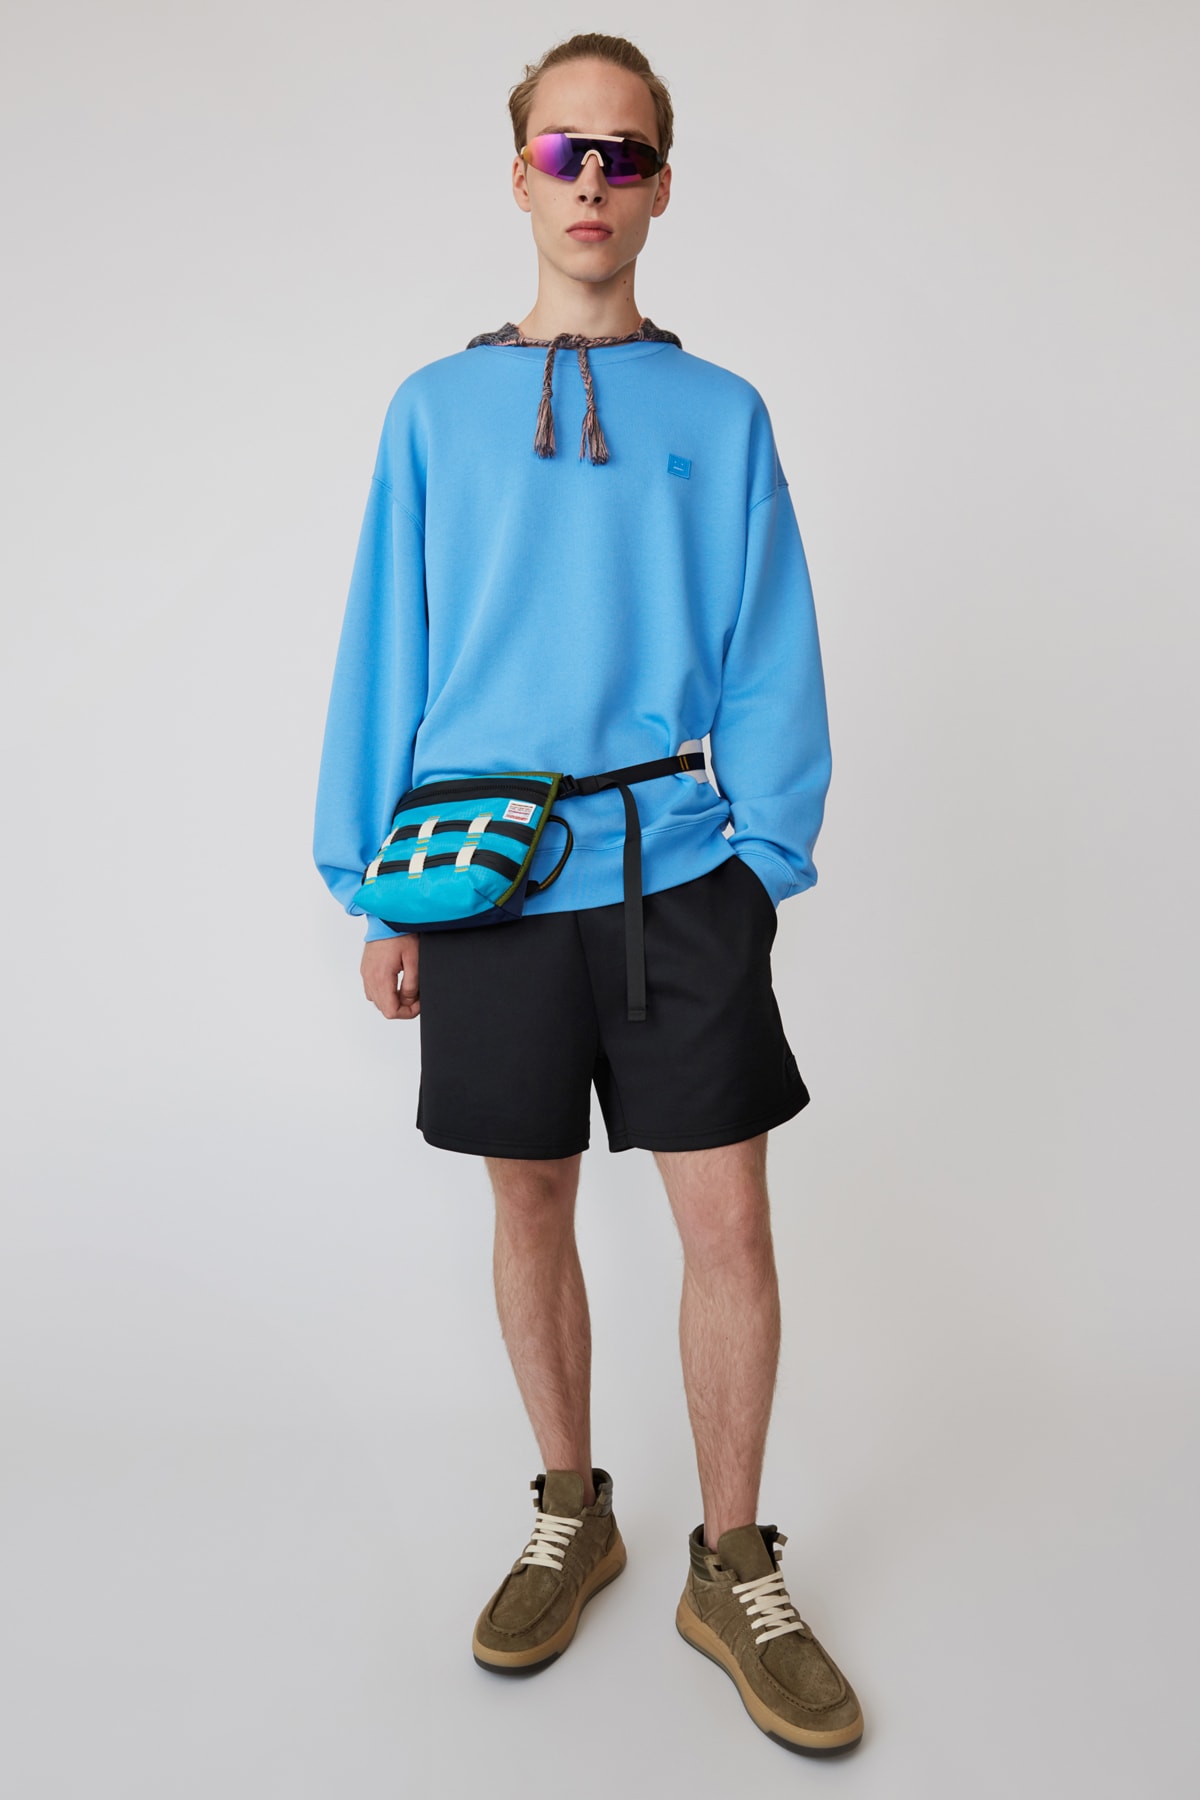 Acne Studios Spring/Summer 2019 Face Collection Sweatshirt Blue Shorts Black